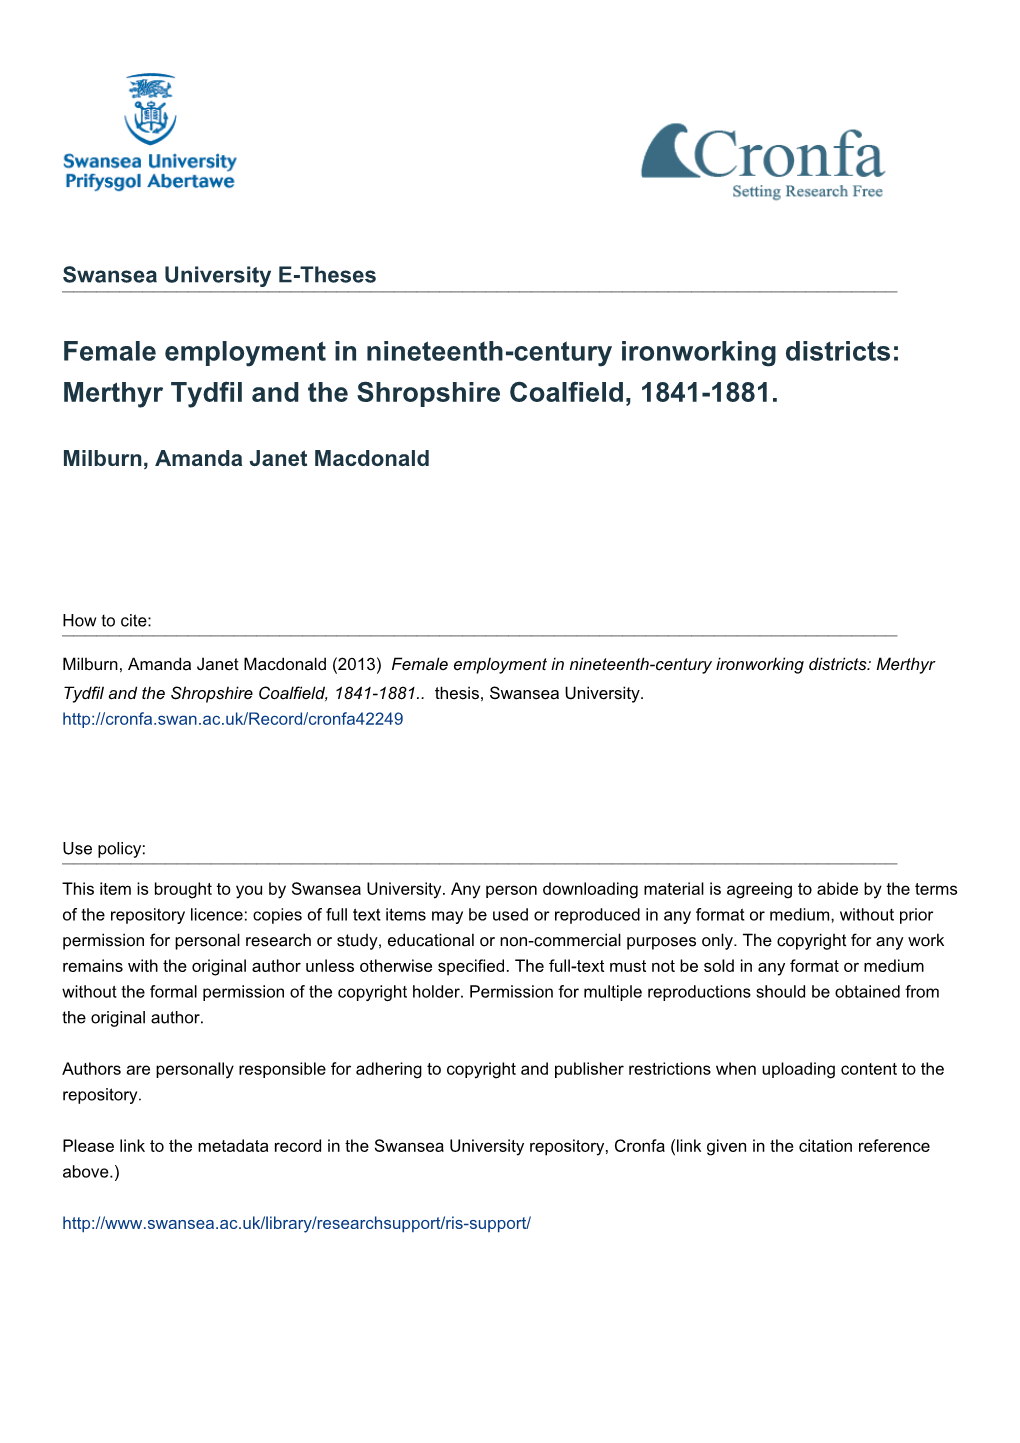 Merthyr Tydfil and the Shropshire Coalfield, 1841-1881